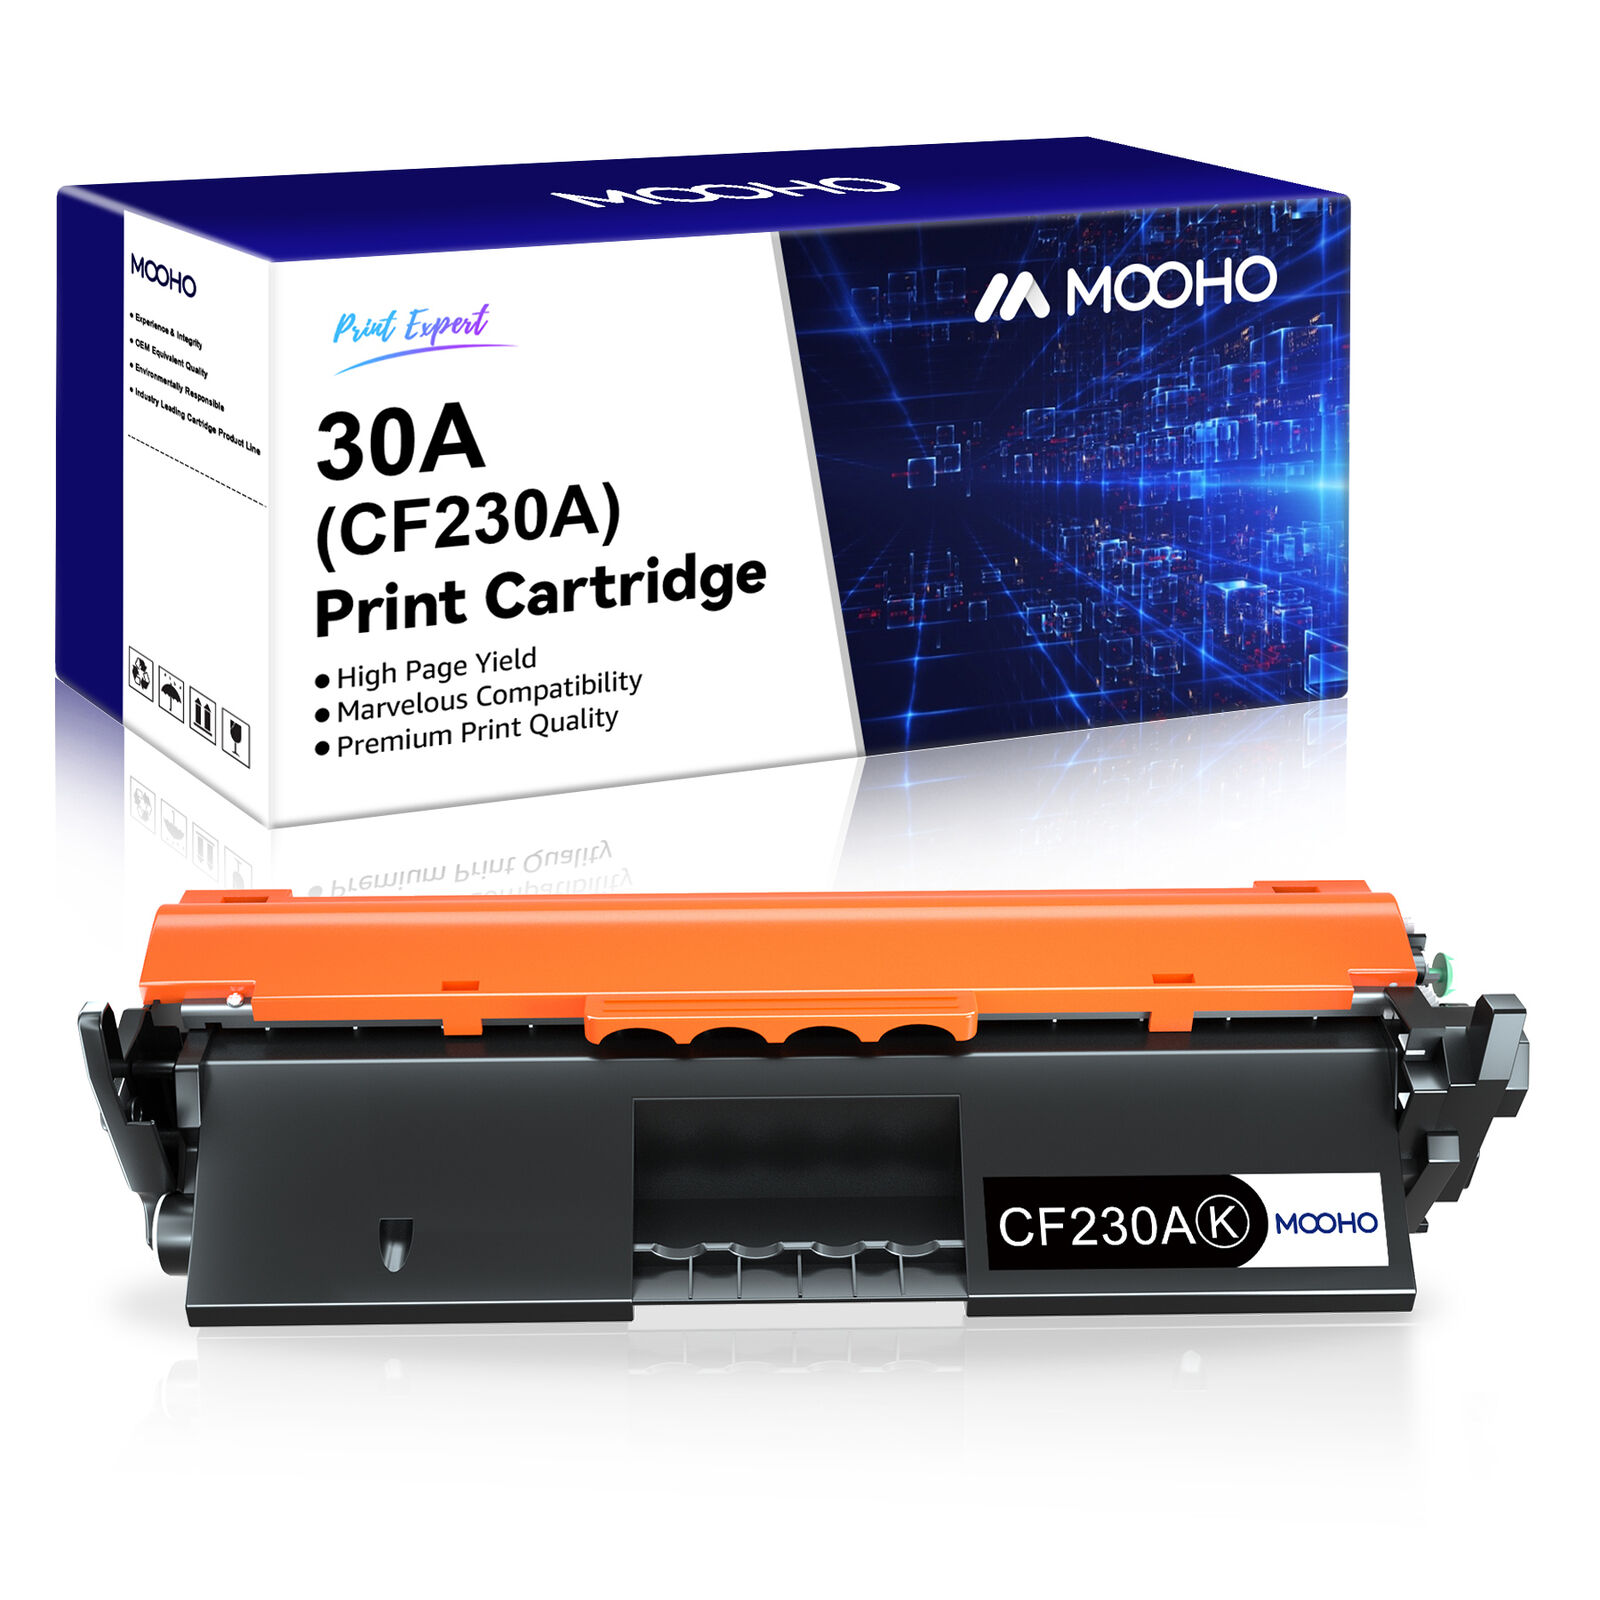 CF232A CF230A Toner Cartridge for HP LaserJet Pro M203dn M203dw MFP M227sdn Lot